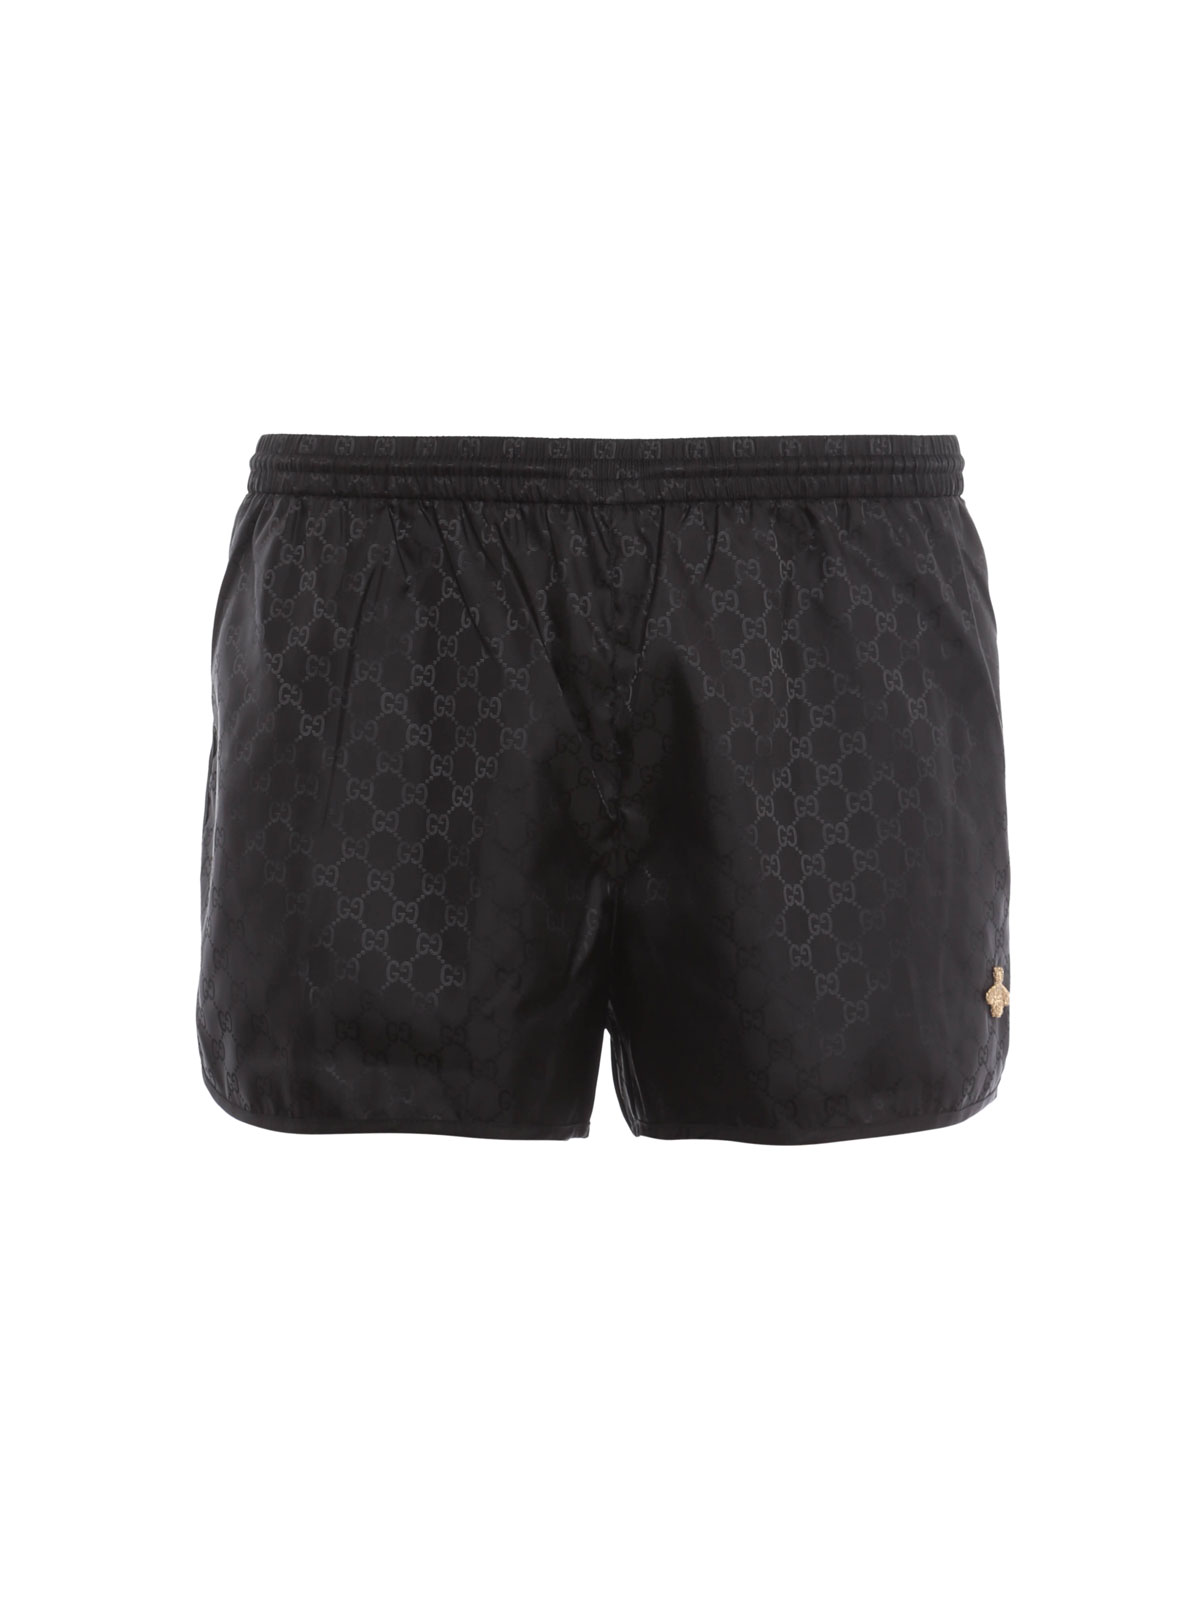 Gucci - GG Supreme swim shorts - Swim shorts & swimming trunks - 410571 XT455 1000